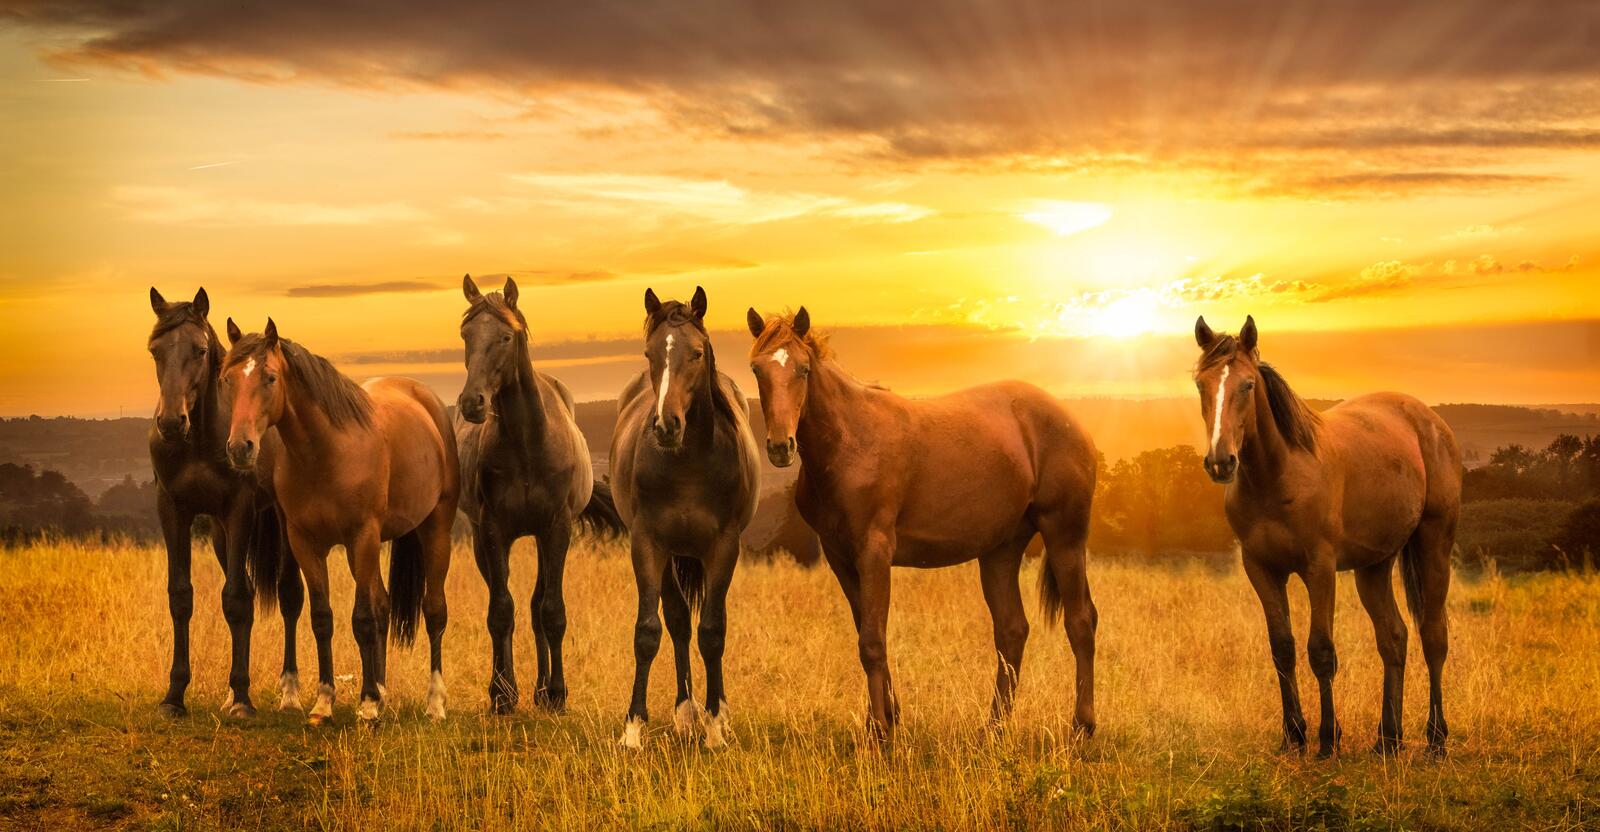 Wallpapers sunset field horses on the desktop